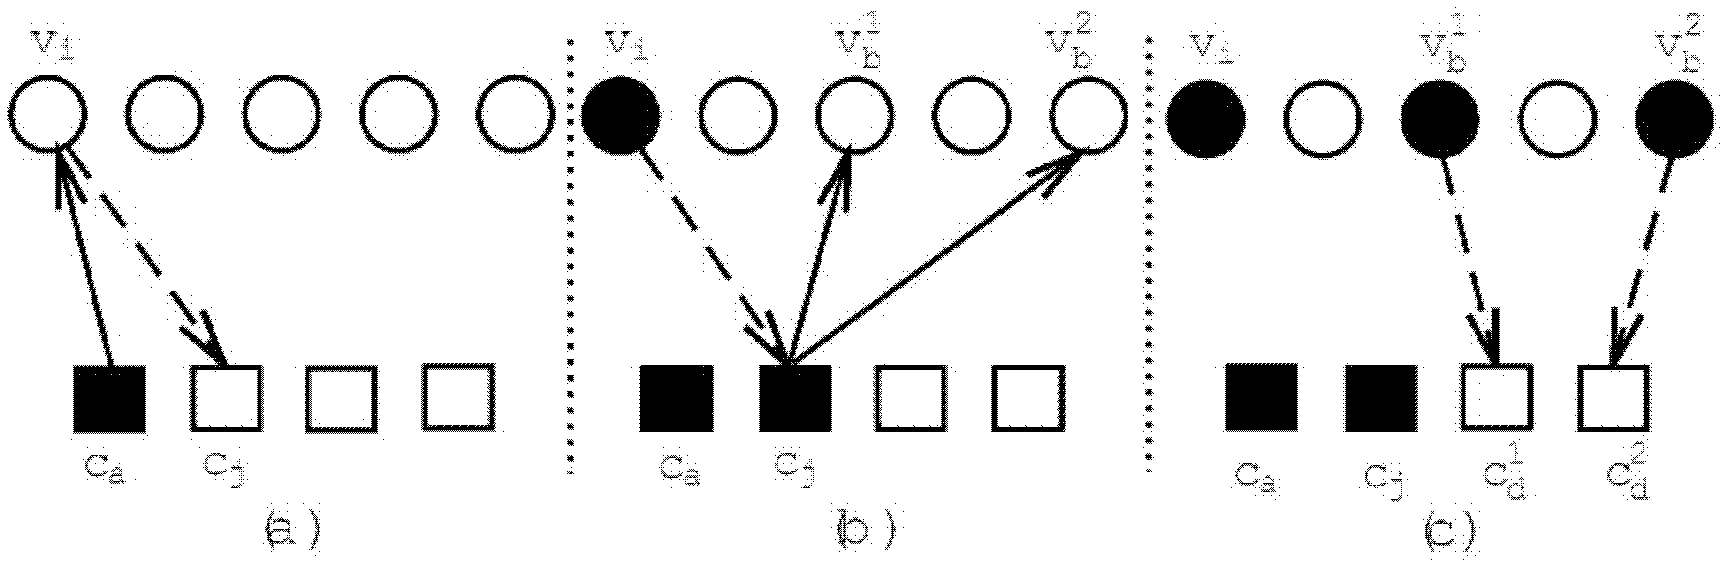 Dynamic asynchronous BP decoding method